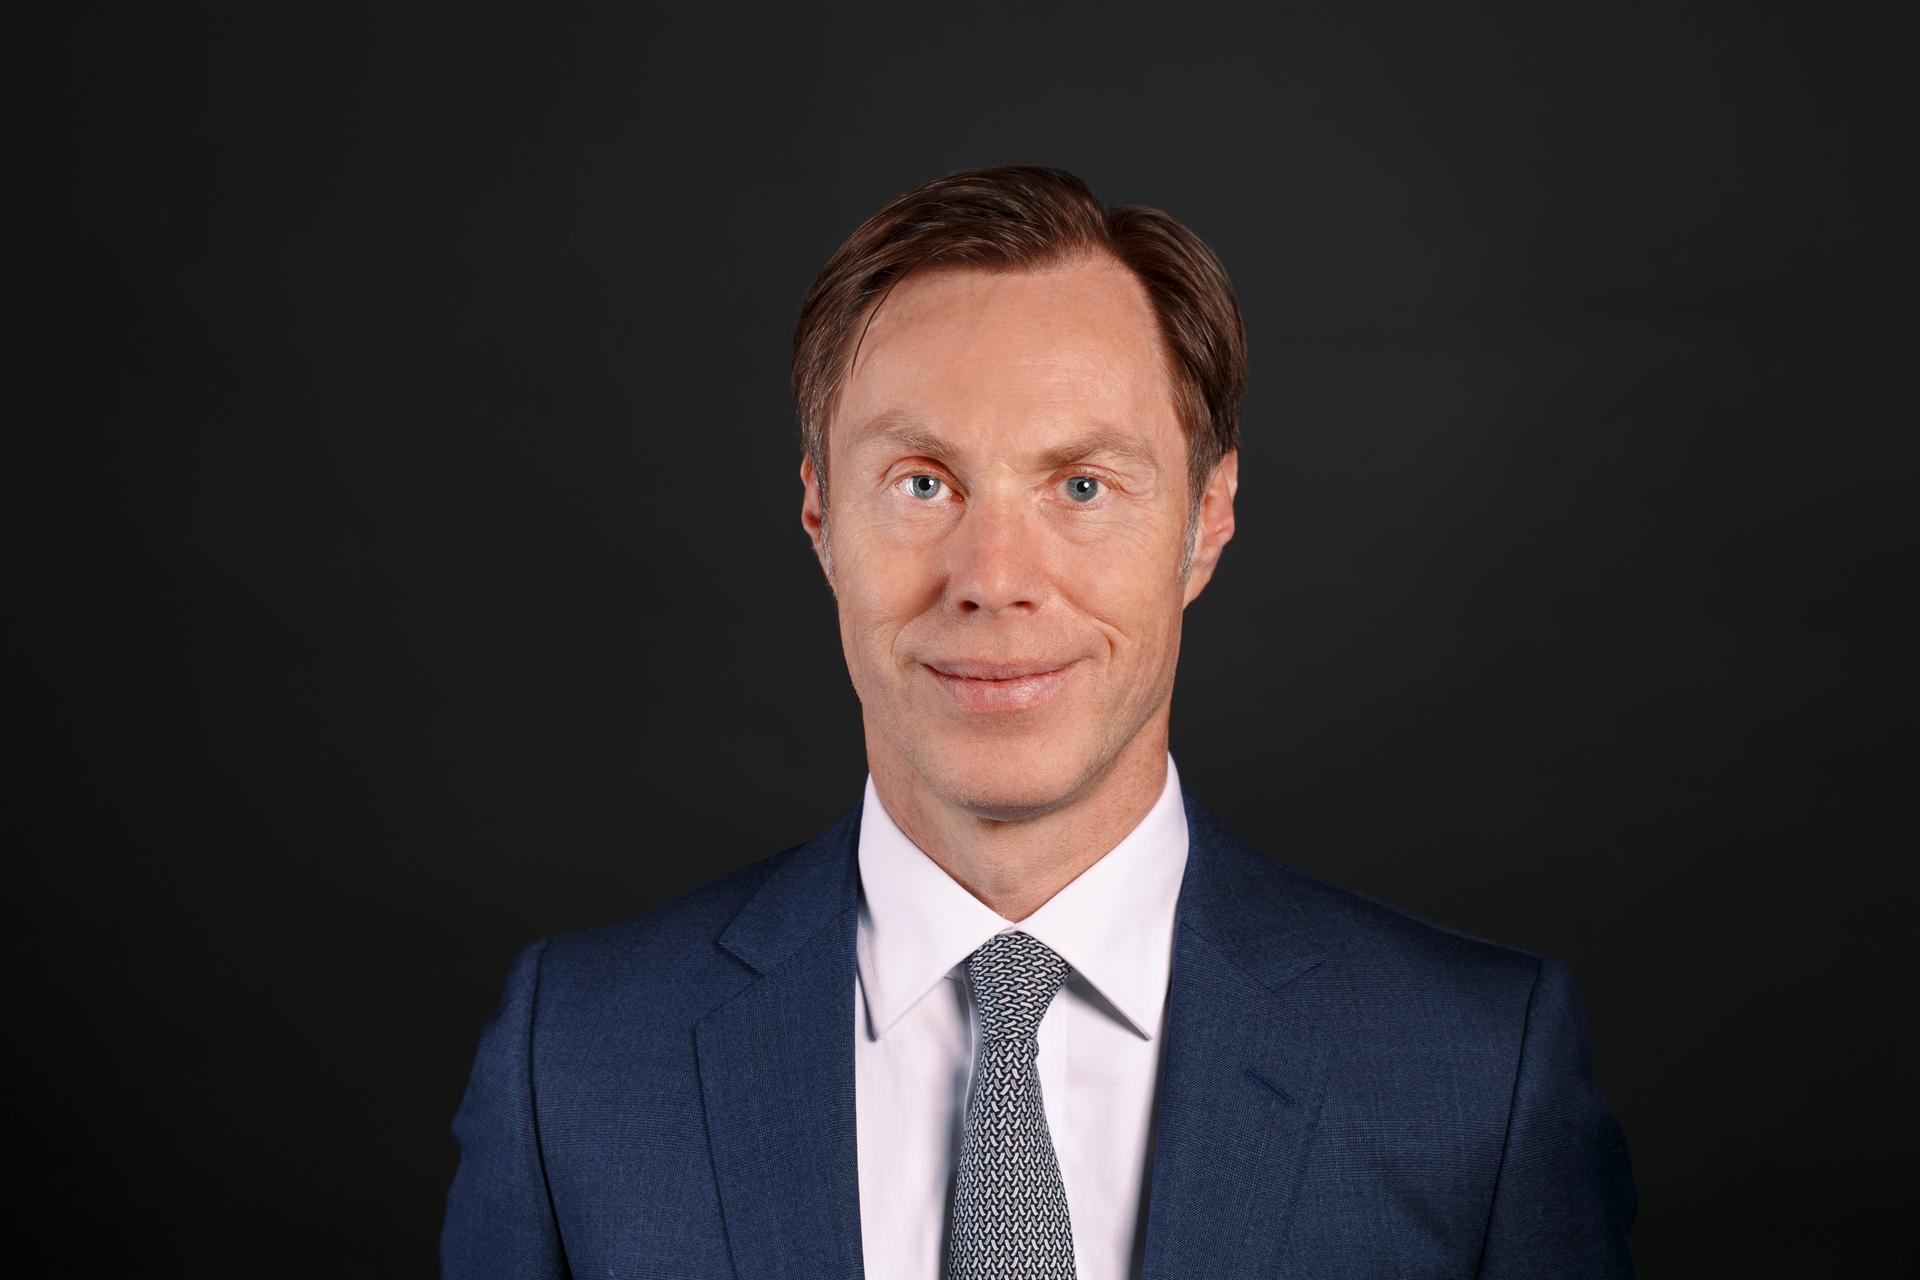 Portrait von Thomas Fischer, Member of the Executive Board, Head Wealth Management